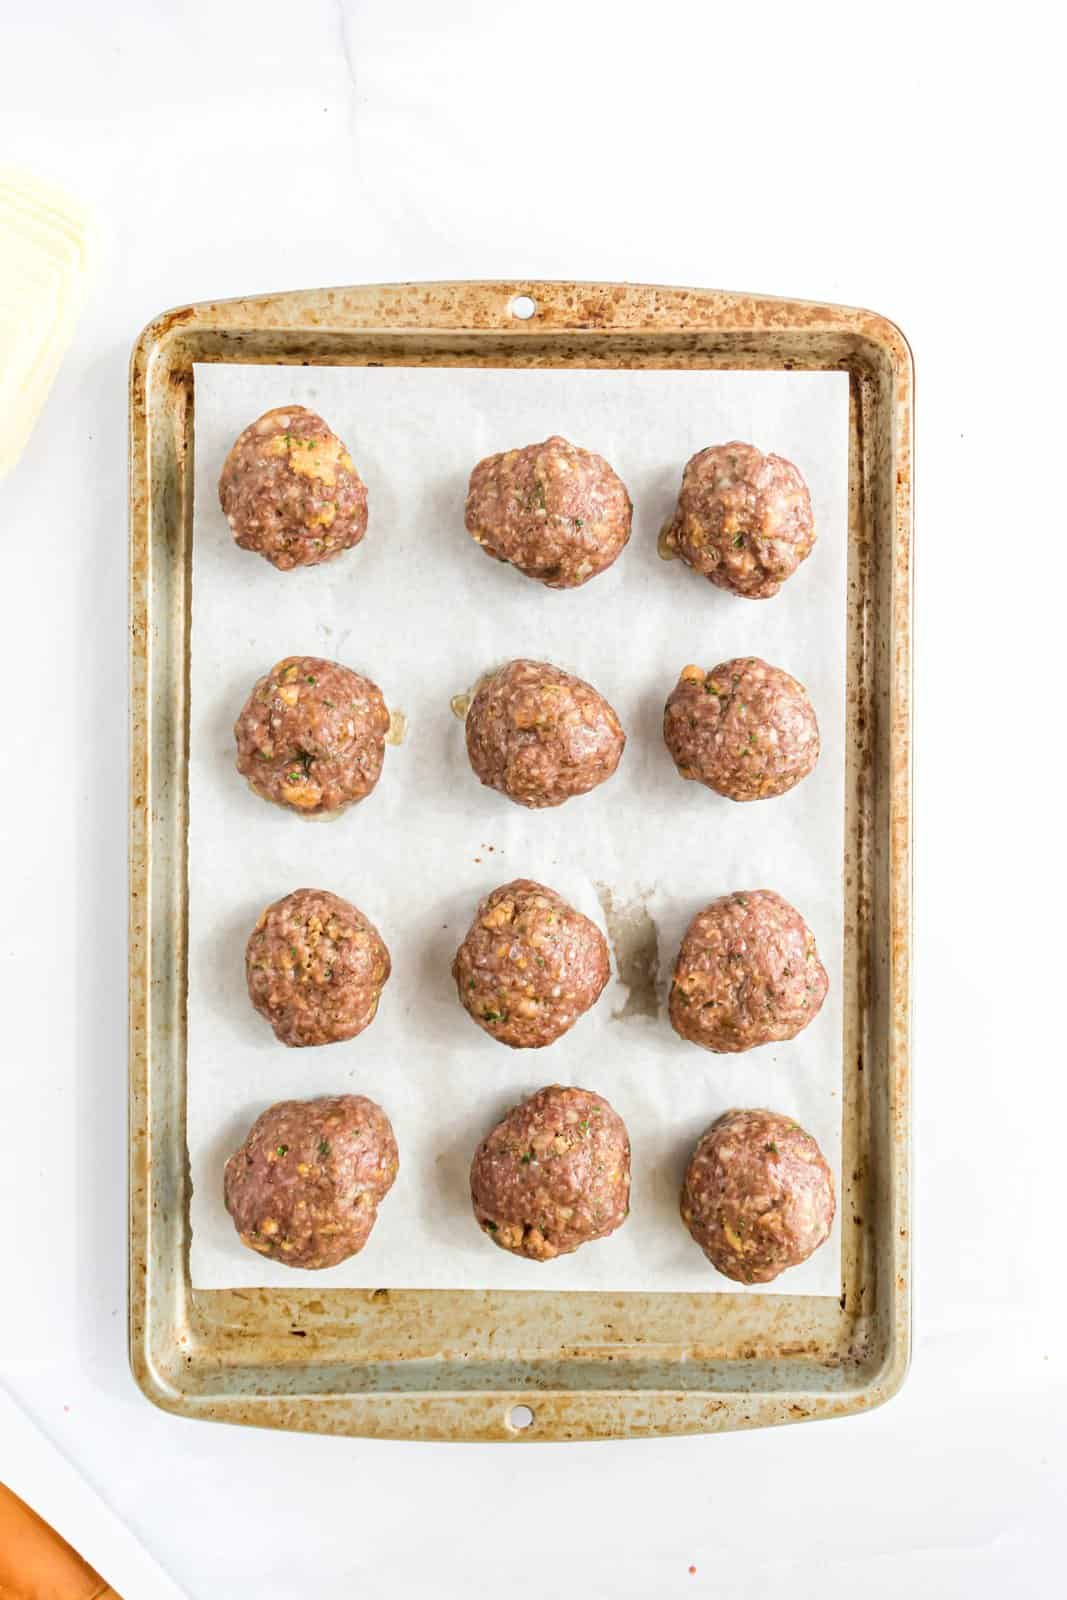 Homemade baked meatballs on a baking sheet.